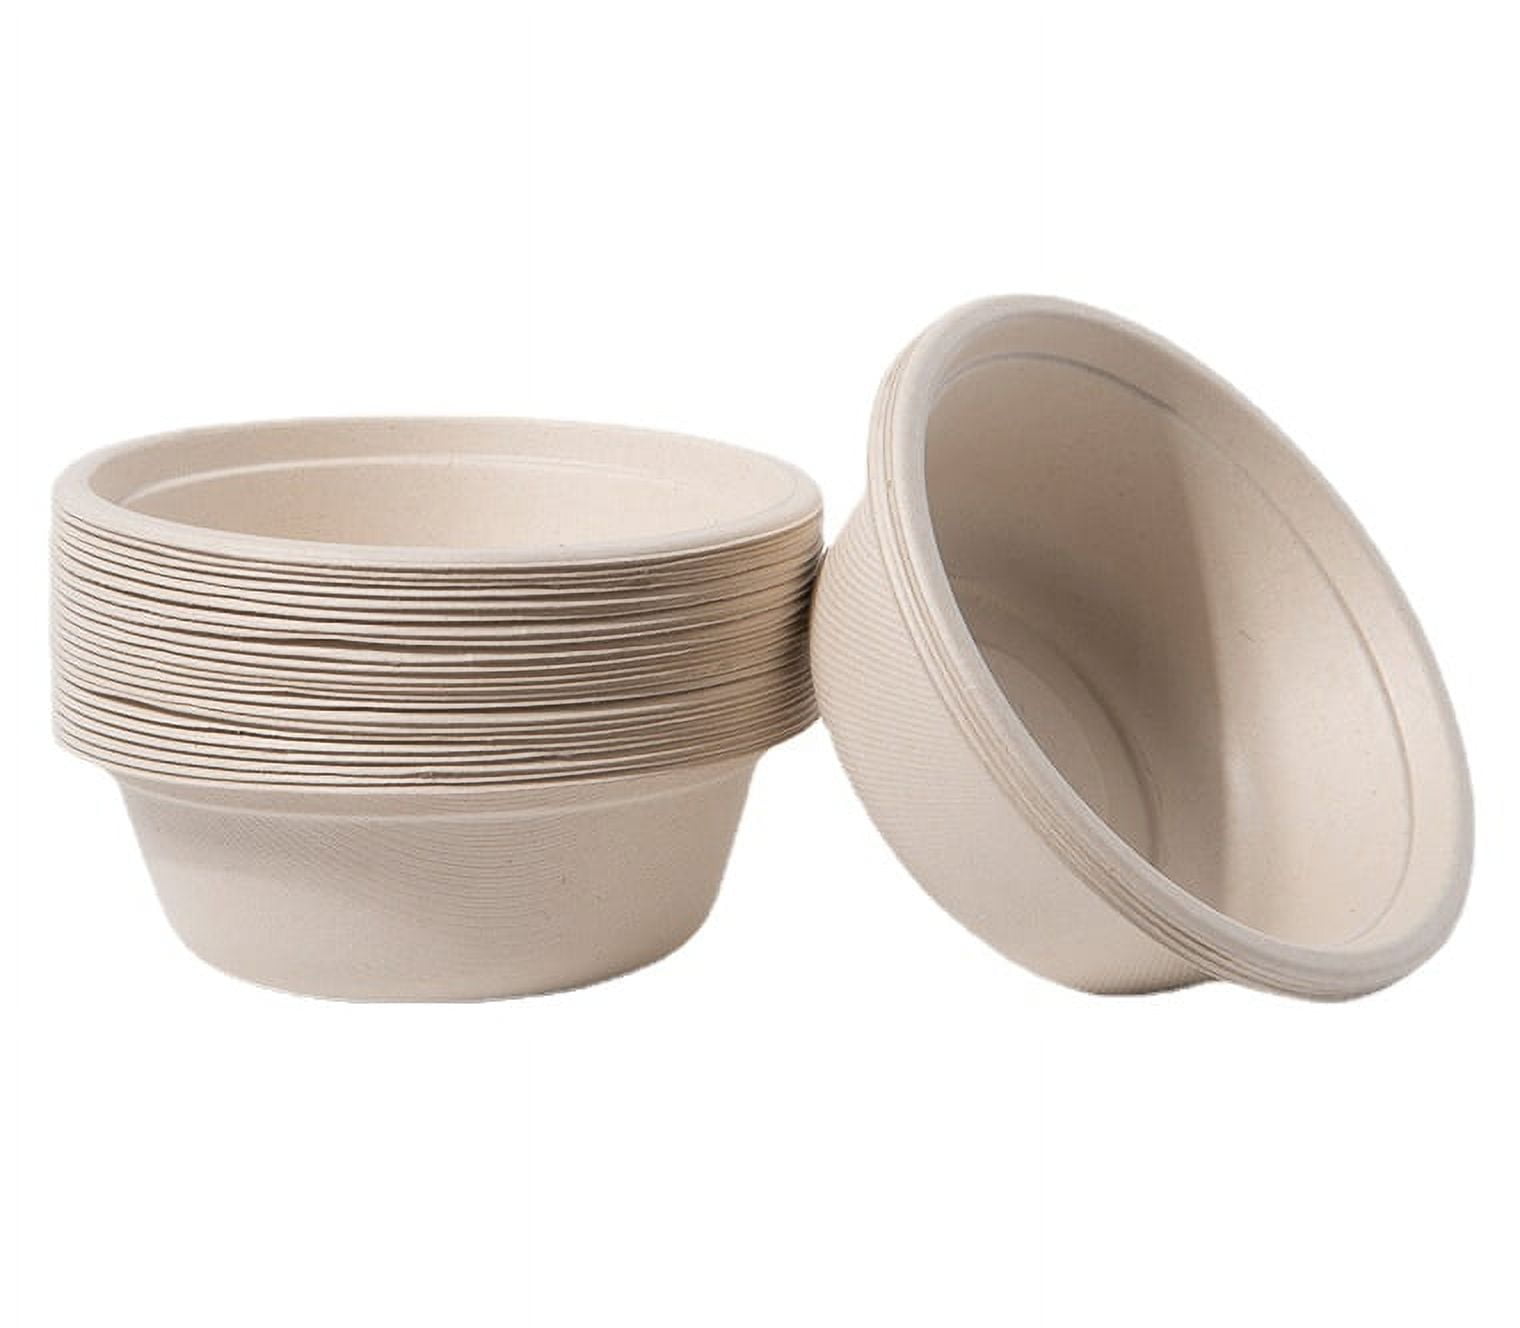 Hemoton Bowls Paper Bowldinnerware Disposable Compostable Styrofoam Plates  Bulk Soup Biodegradable Camping Party Set Tableware